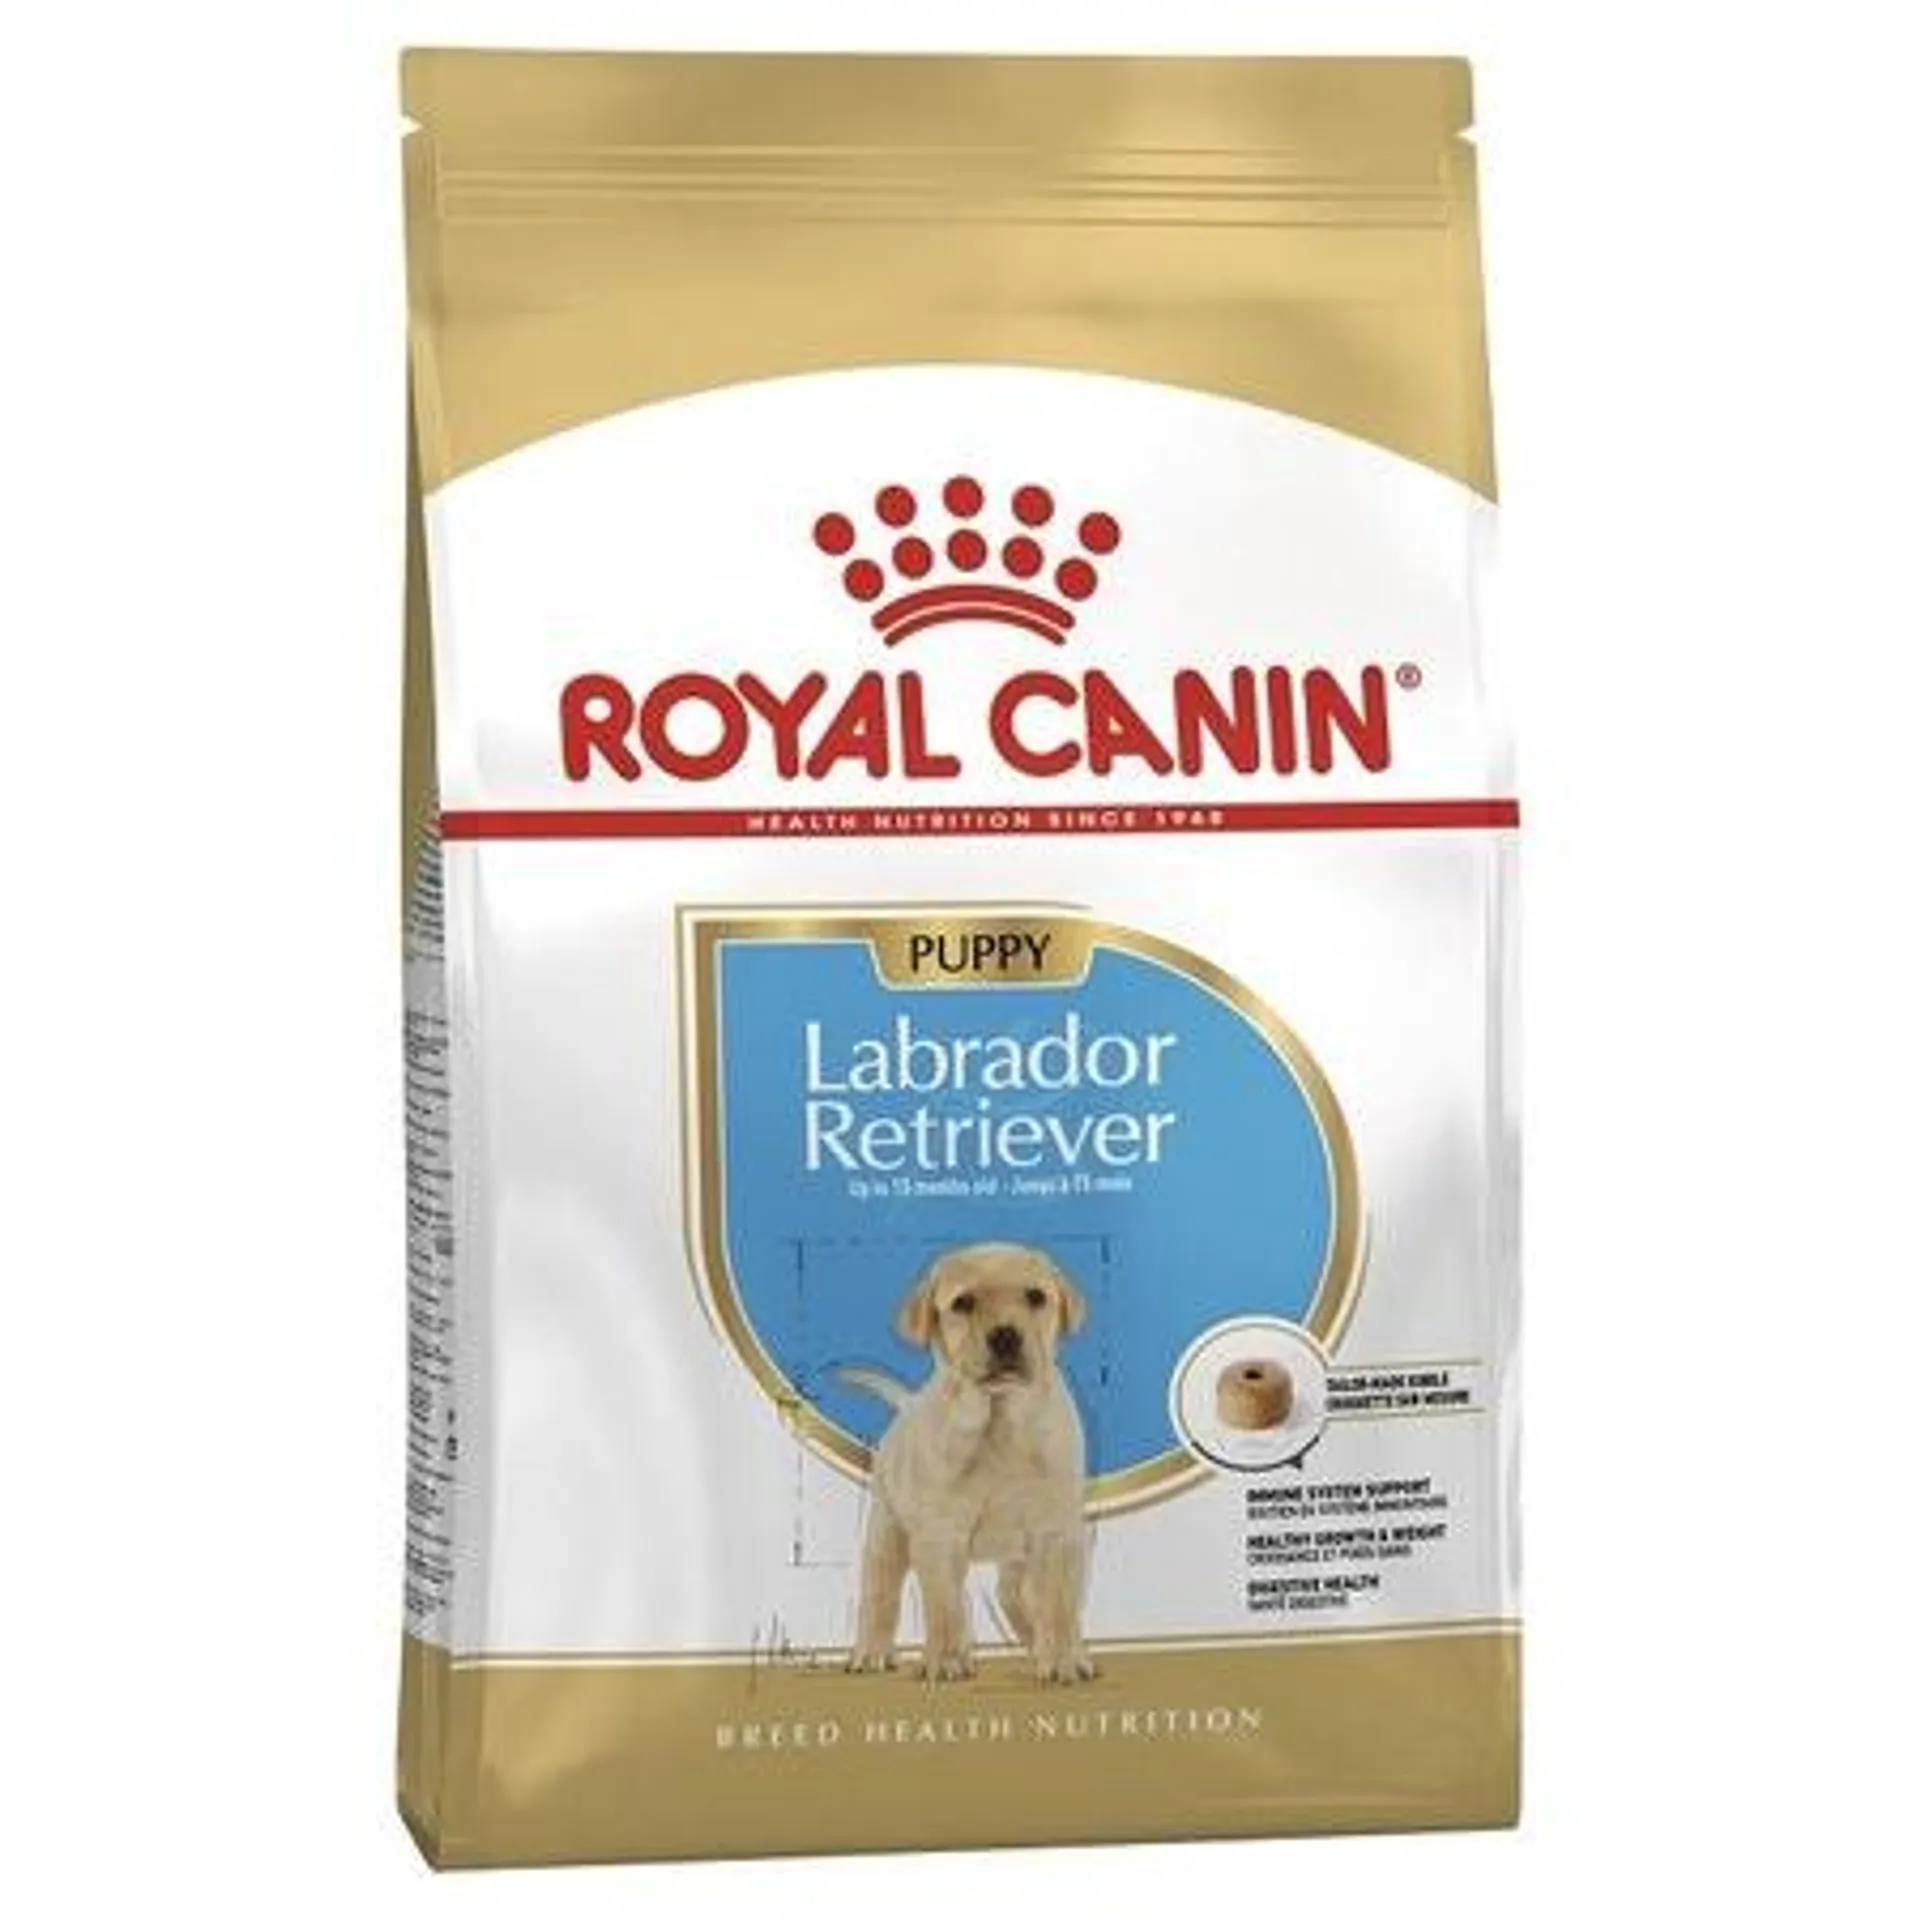 Royal Canin Labrador Puppy Food